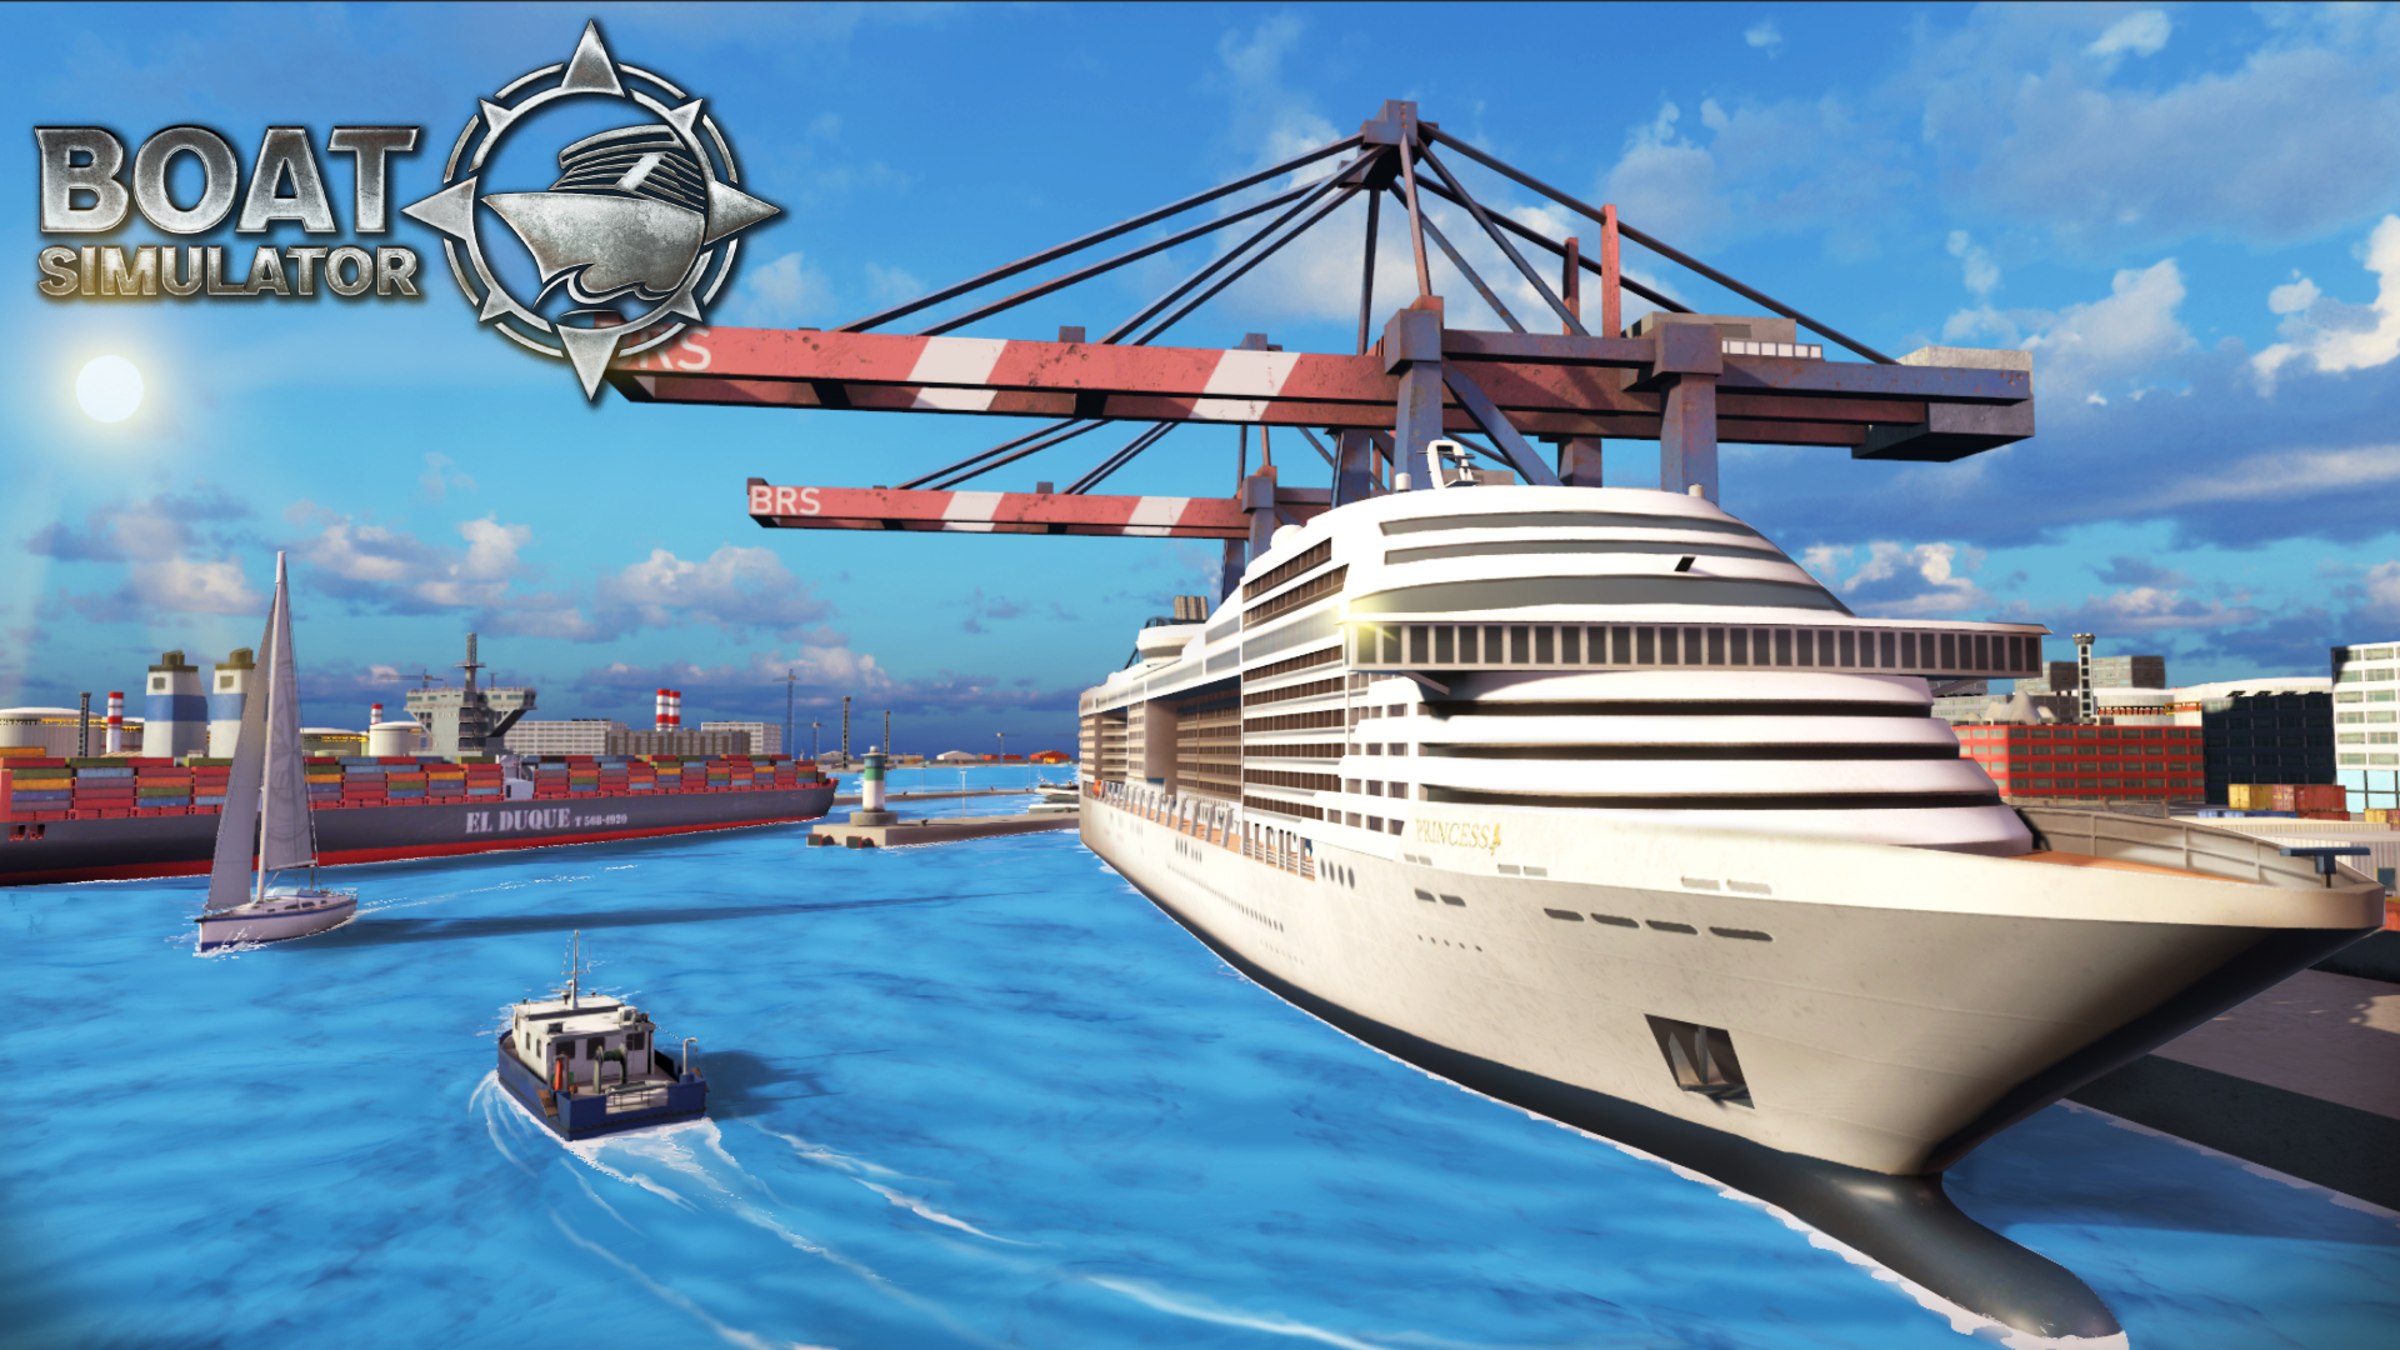 Boat Simulator for Nintendo Switch